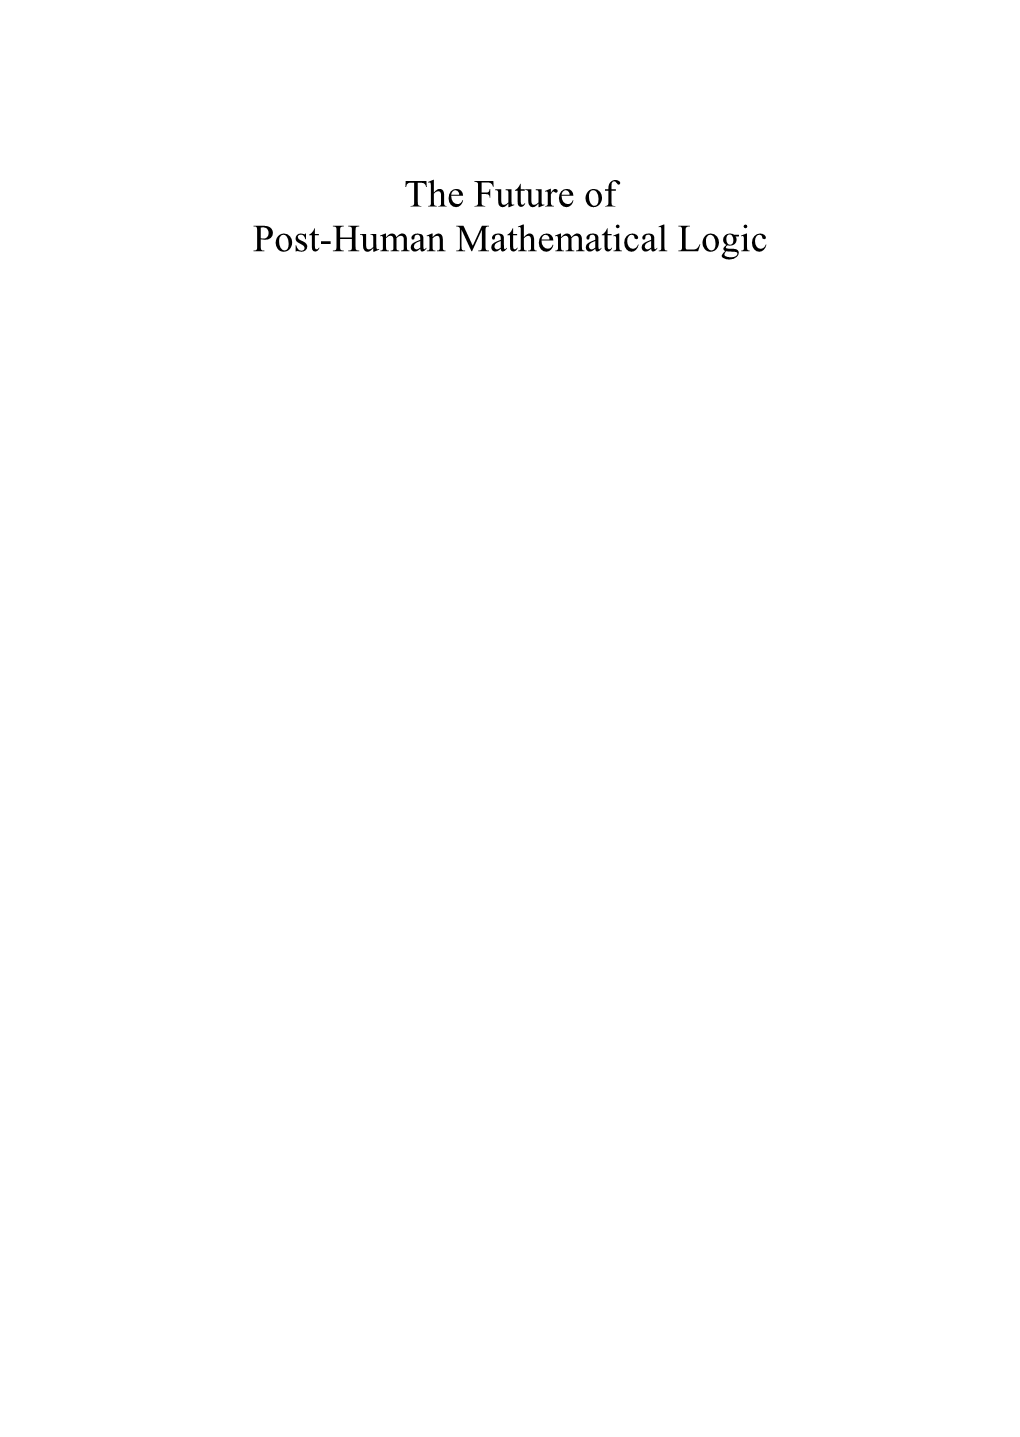 The Future of Post-Human Mathematical Logic